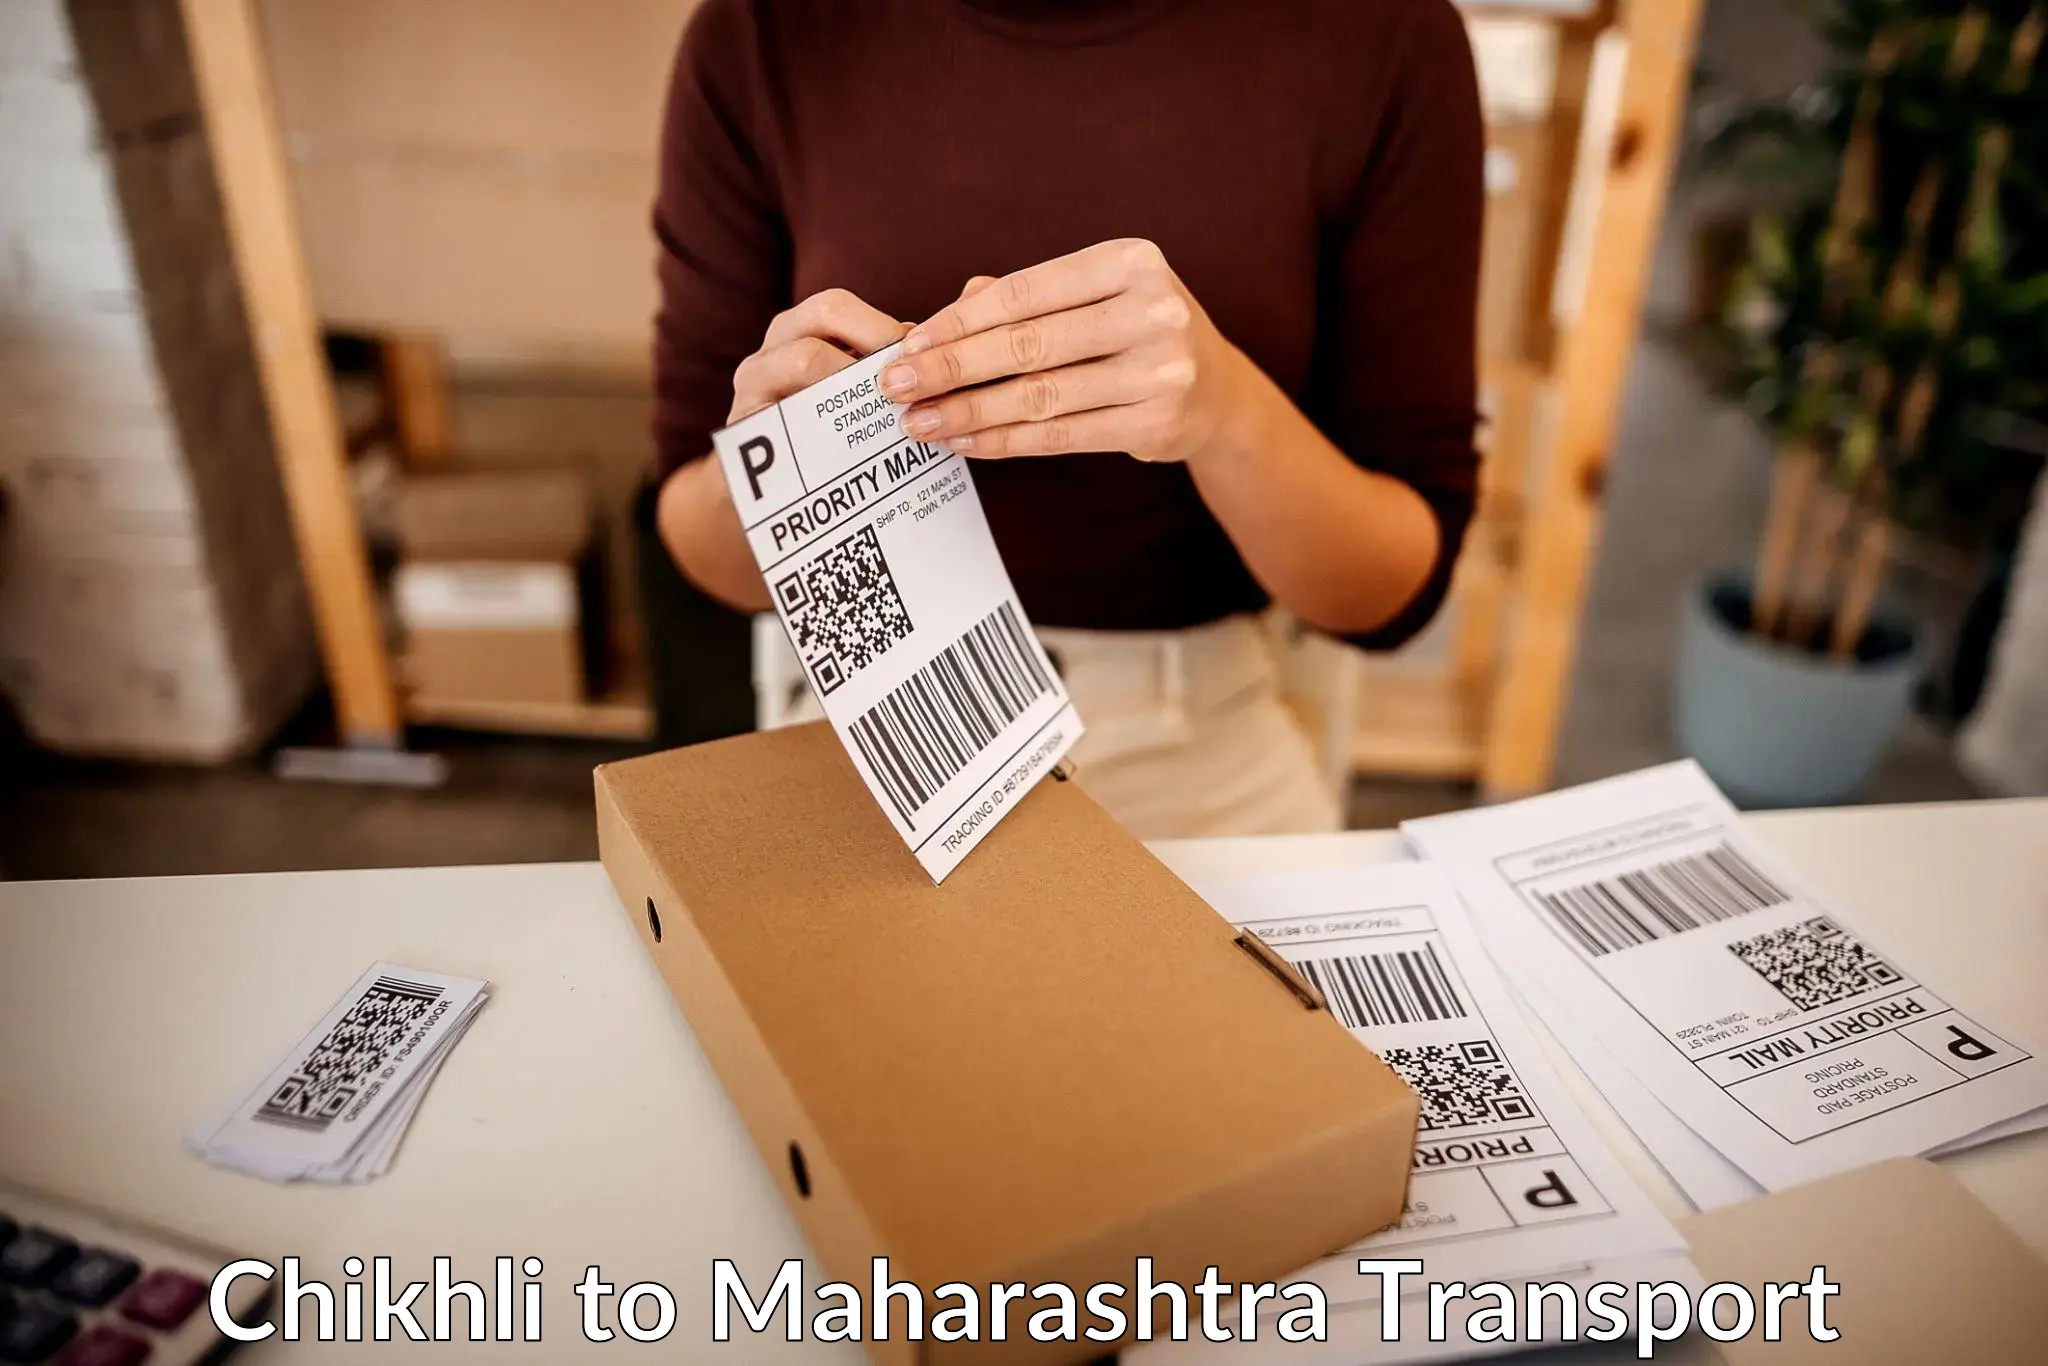 Lorry transport service Chikhli to Navi Mumbai